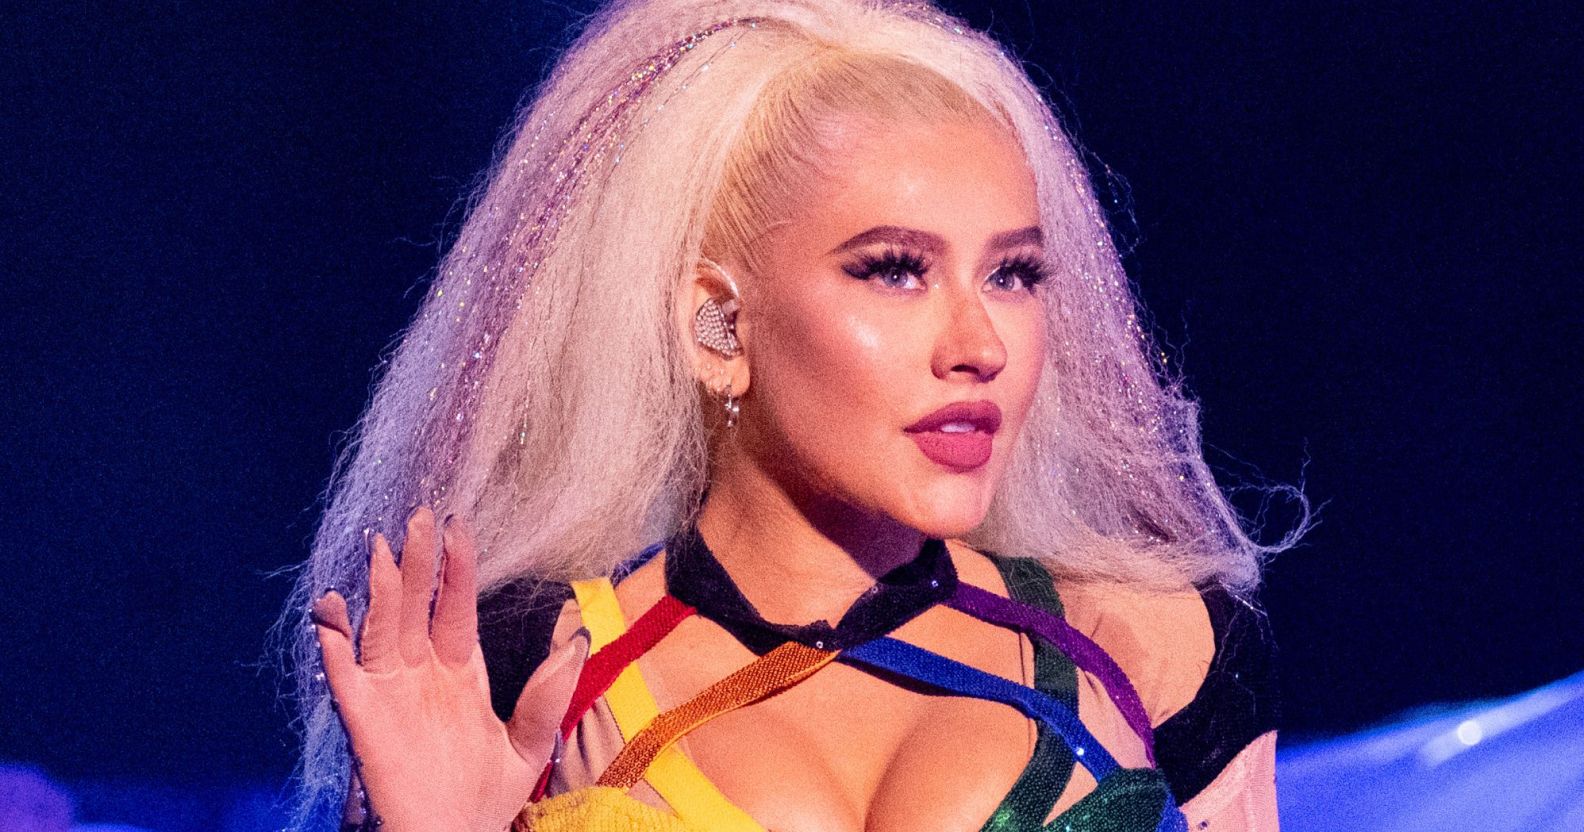 GLAAD Awards Christina Aguilera fans go wild for nomination